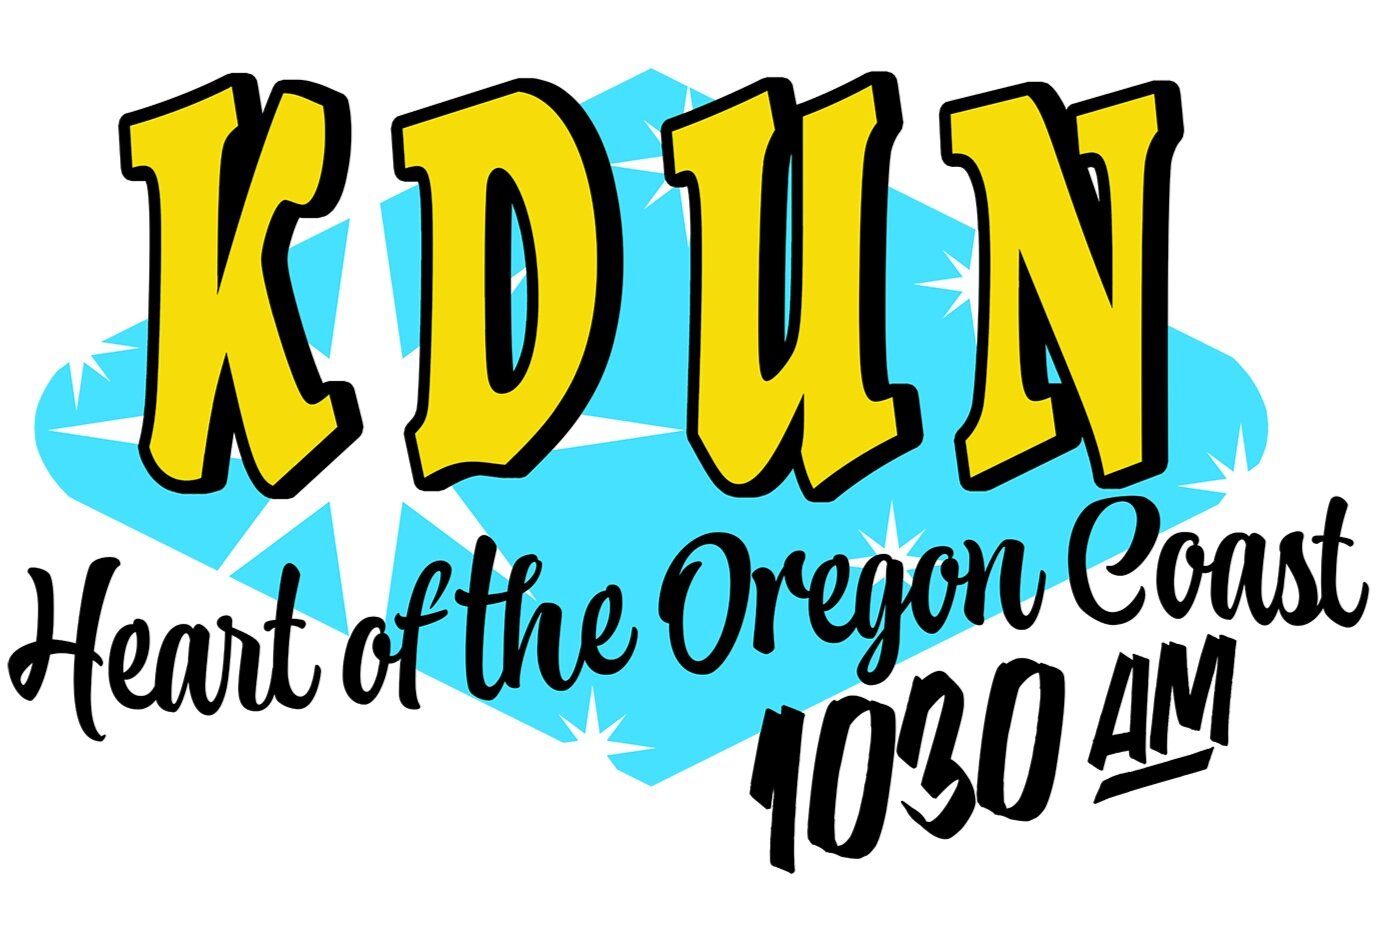 KDUN Radio 1030 AM - Reedsport Oregon